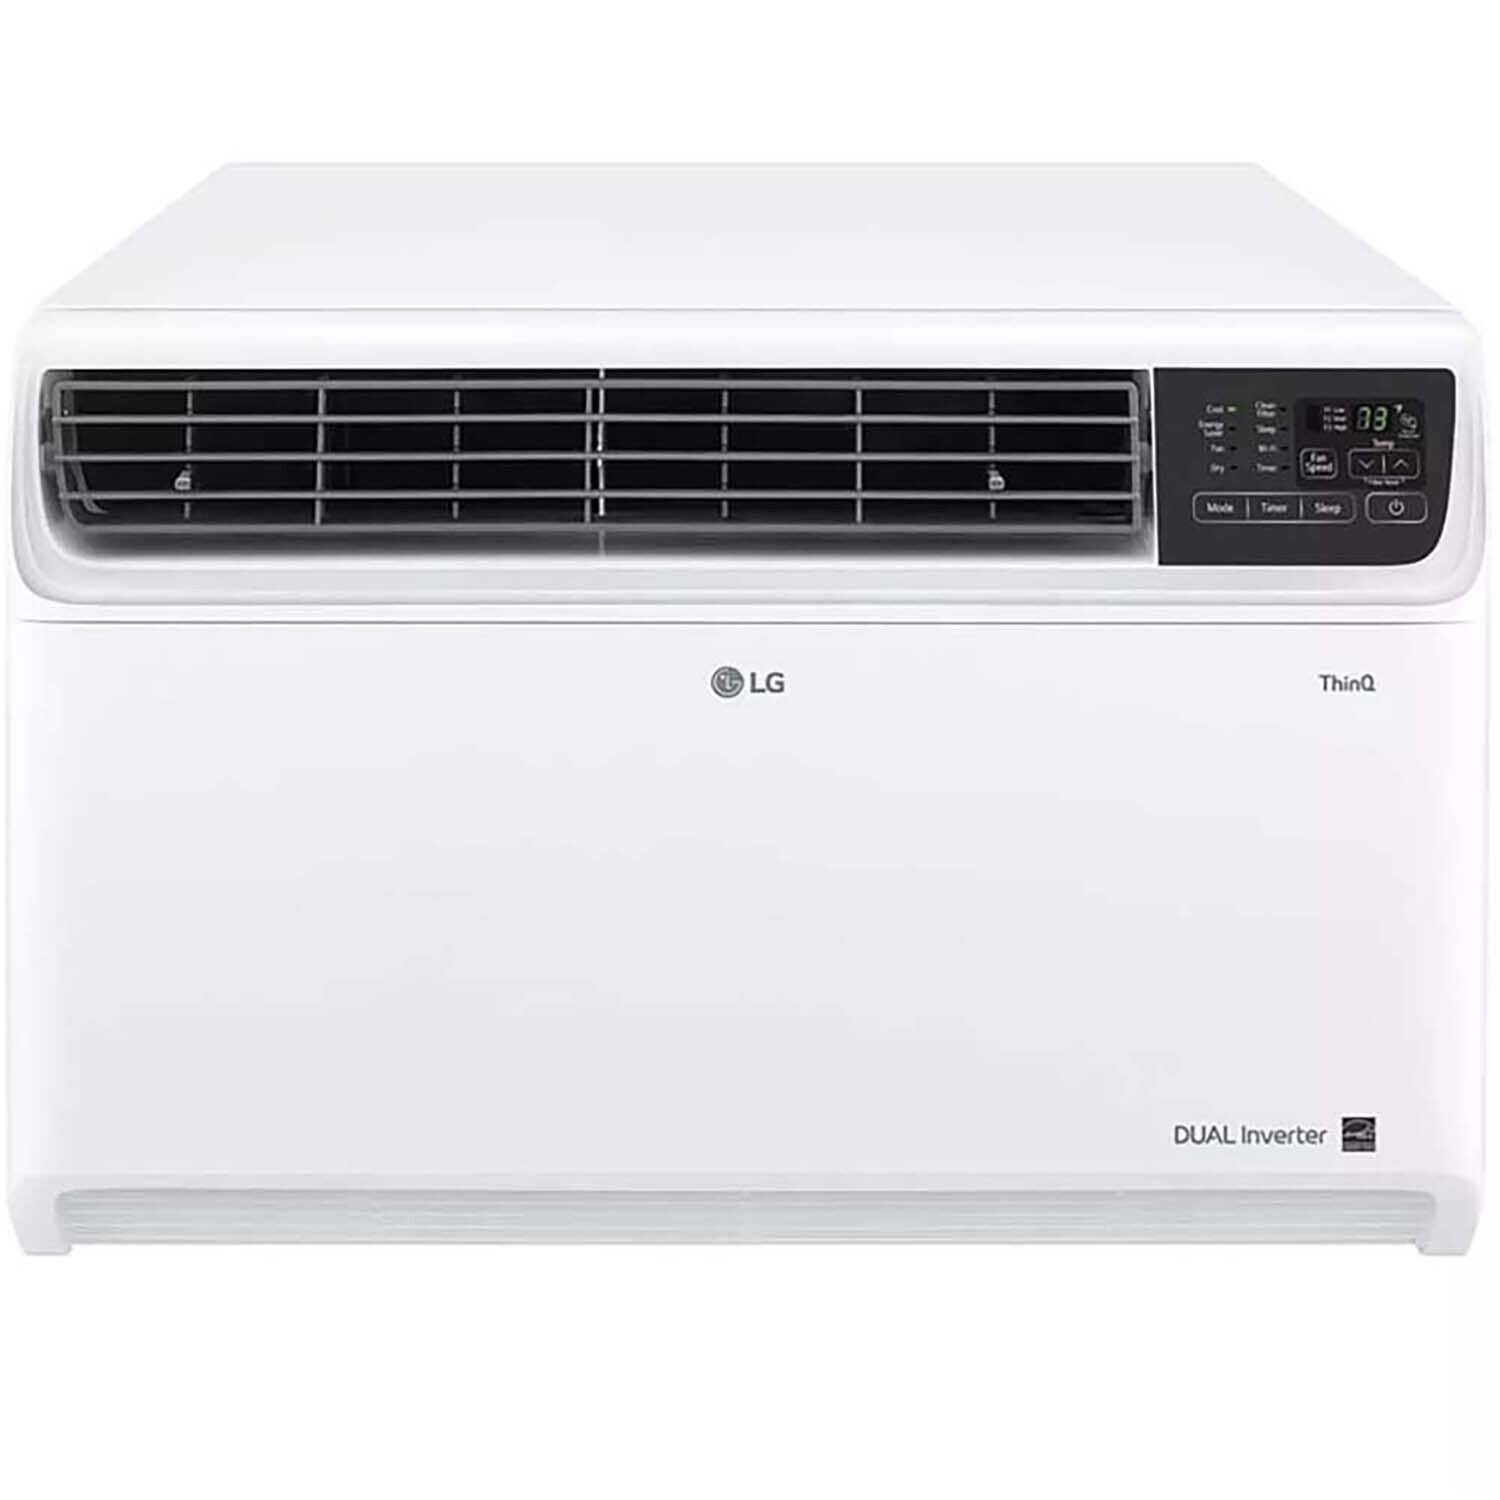 LG 18,000 BTU DUAL Inverter Smart wi-fi Enabled Window Air Conditioner